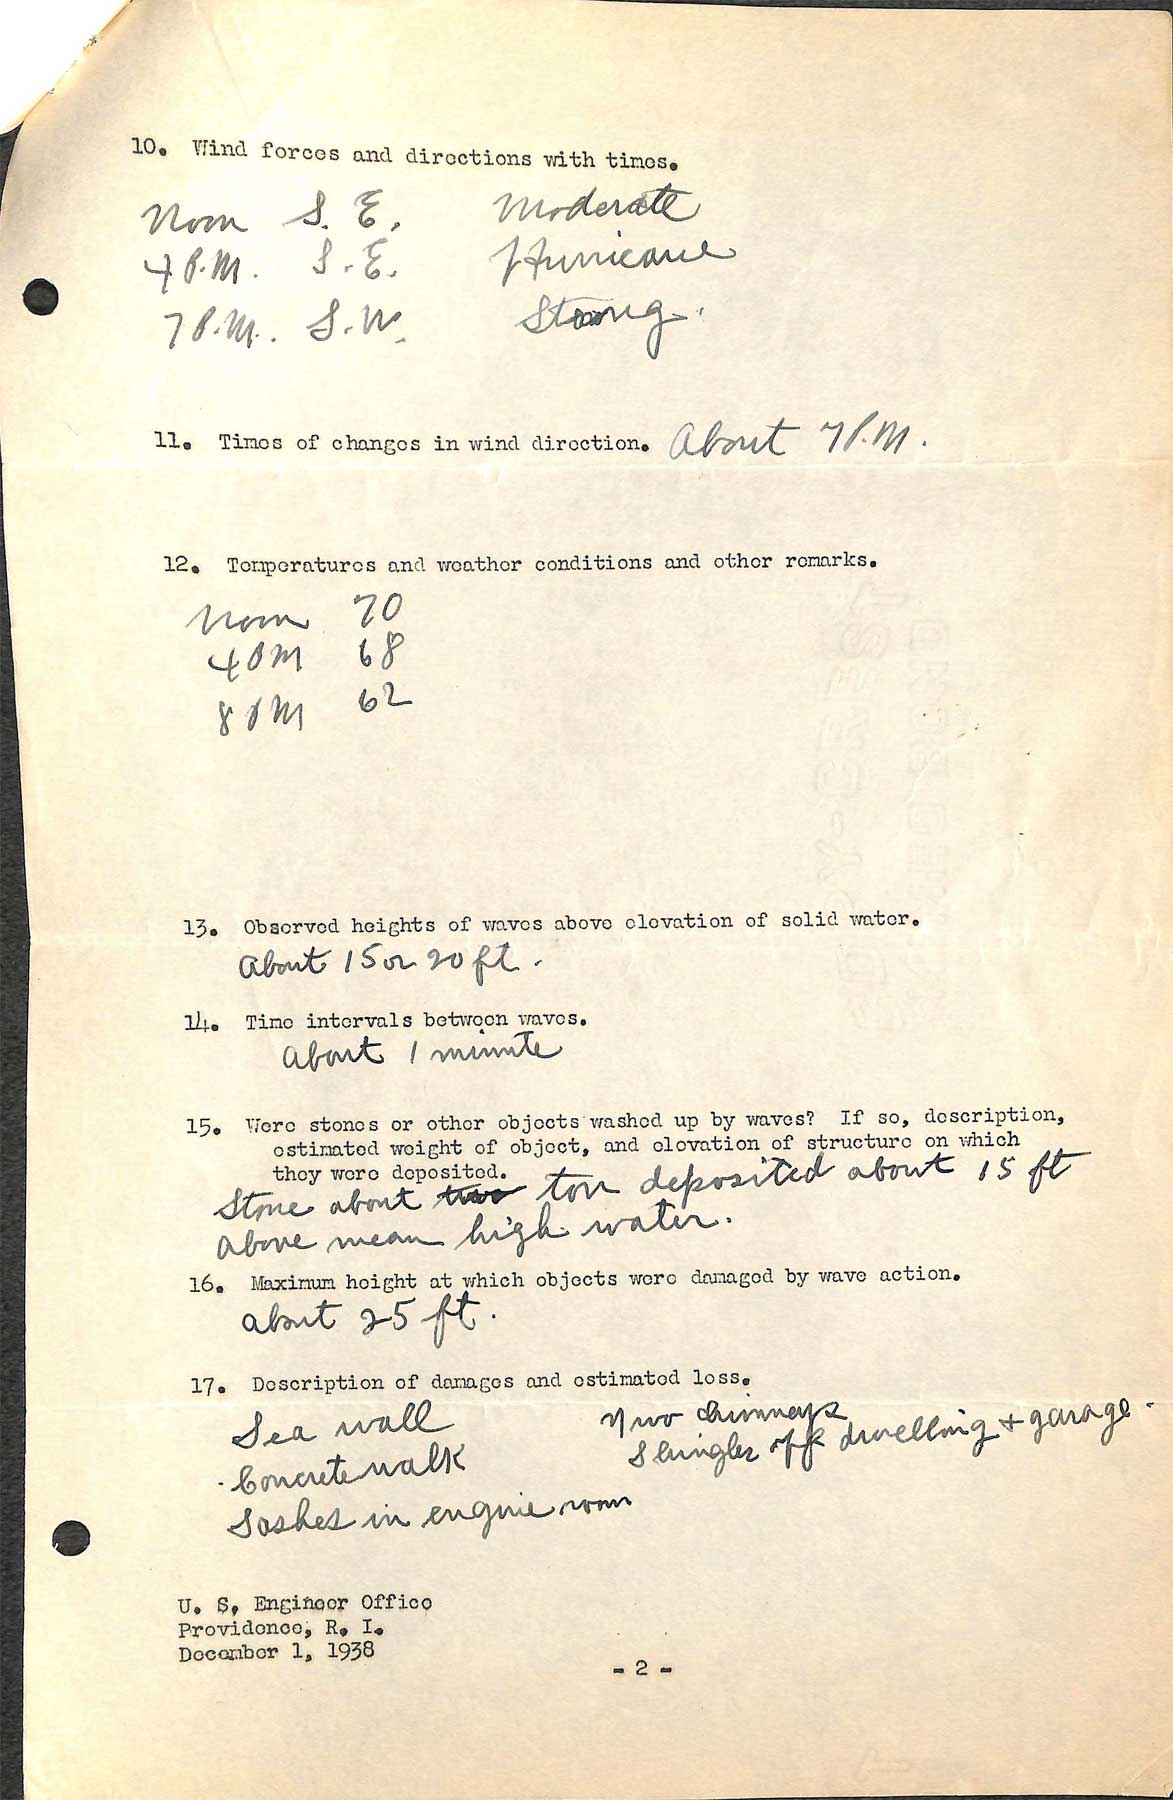 Point Judith Light - A questionnaire regarding the hurricane of September 21, 1938